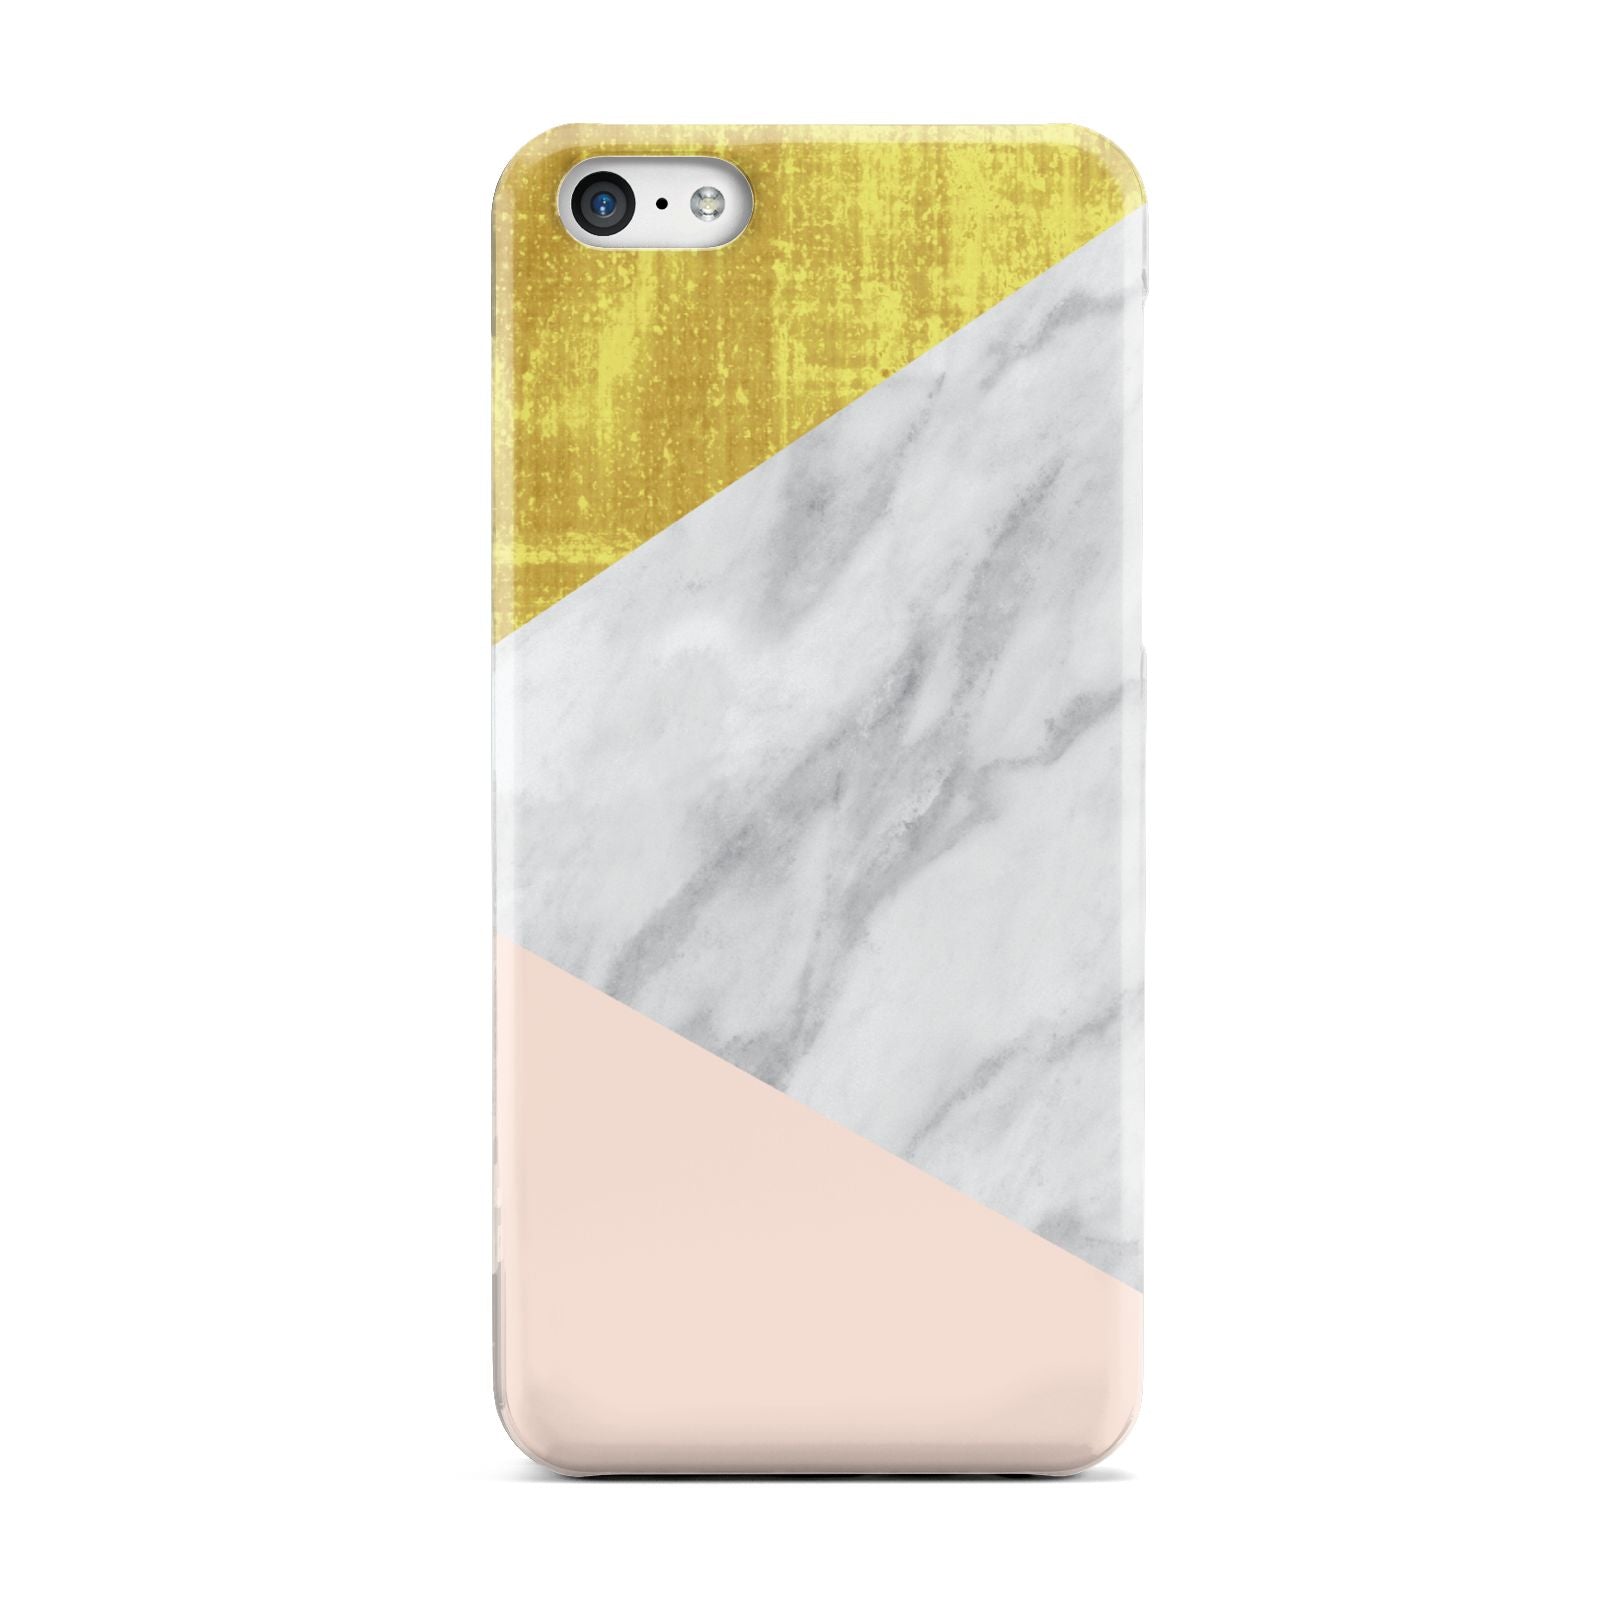 Marble White Gold Foil Peach Apple iPhone 5c Case